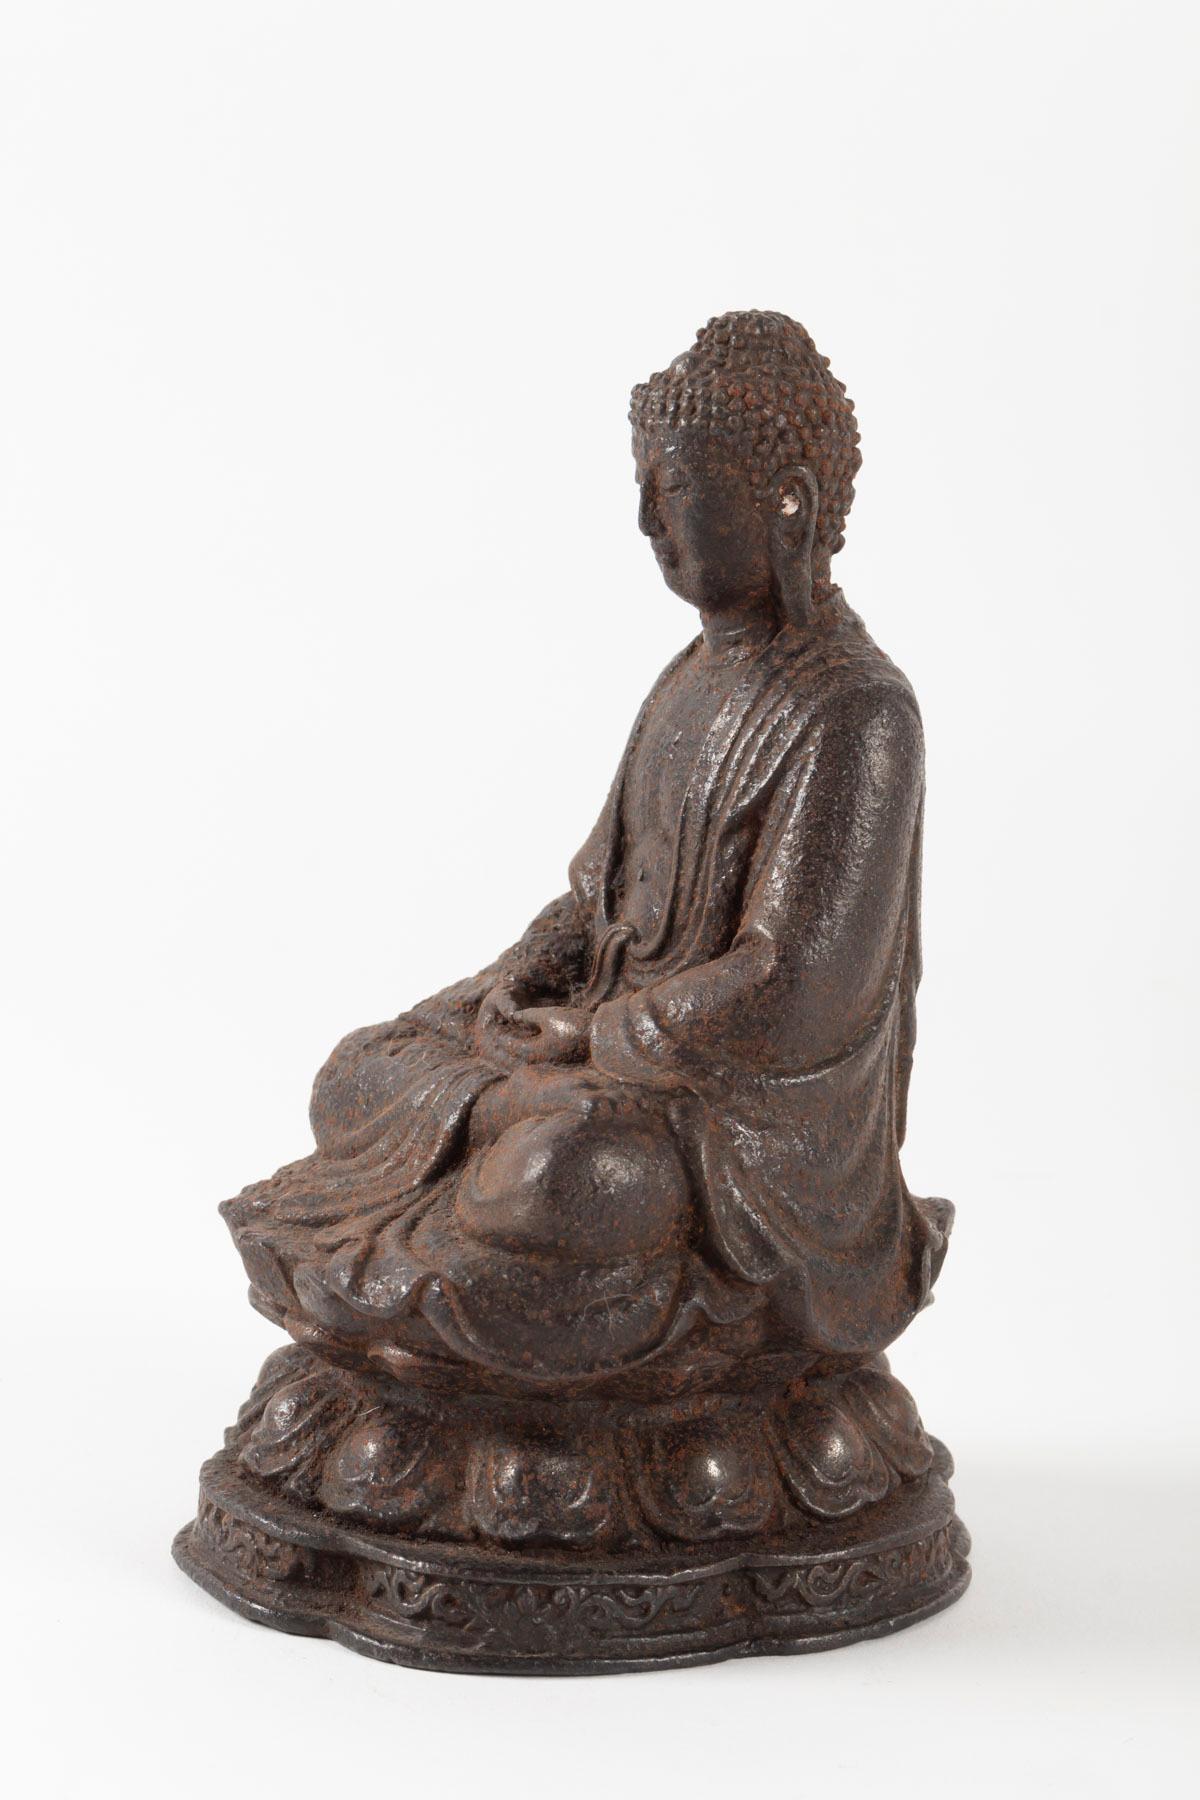 Cast Buddha in Meditation on a Lotus-Shaped Bass, China, 19th Century